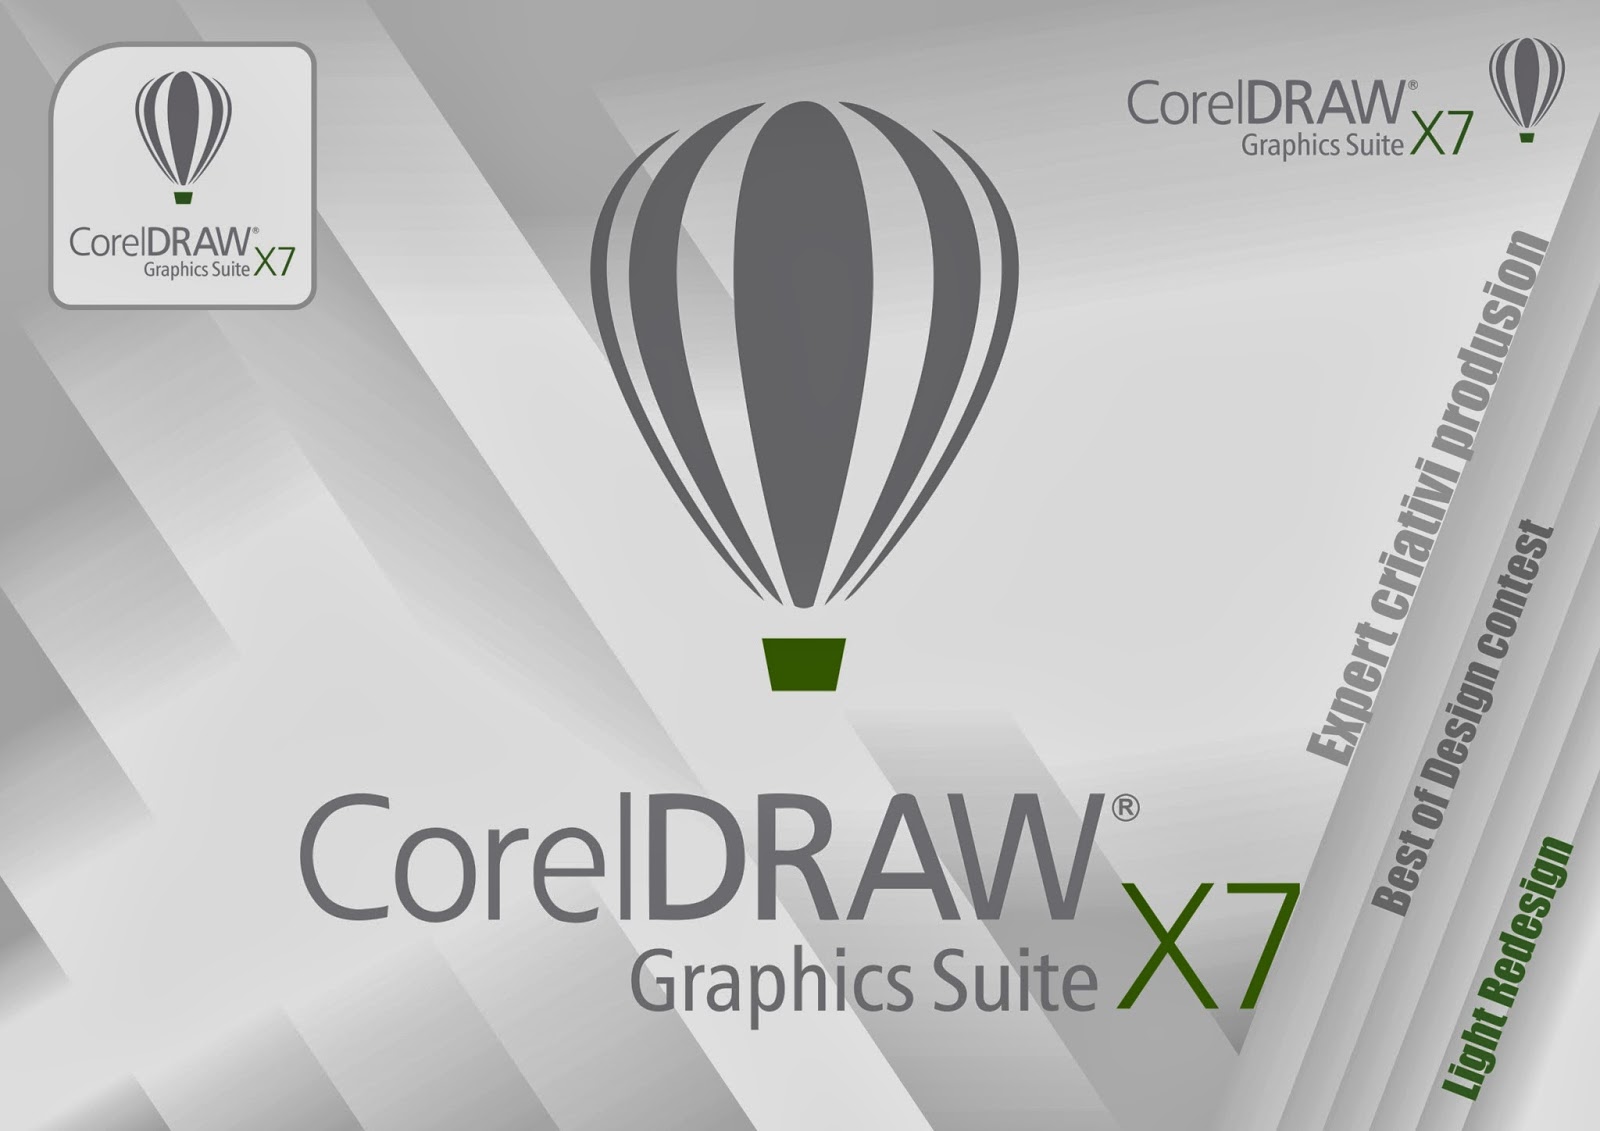 clipart corel draw x7 download - photo #10